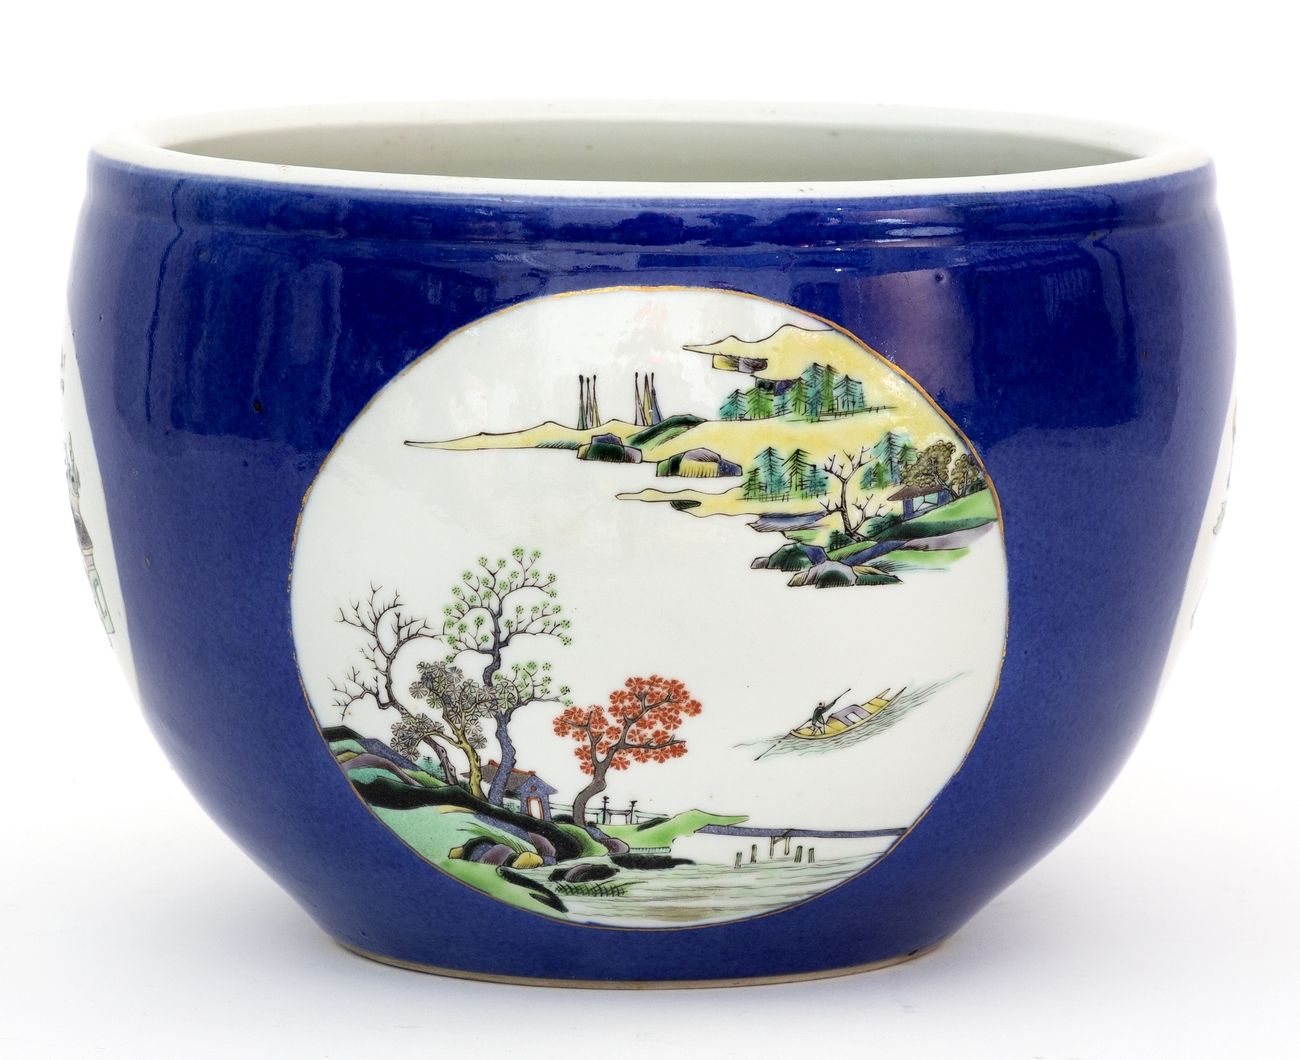 Null 中国，19世纪
瓷器壶盖，粉蓝色背景上有山水画装饰。
康熙款，有六个天启的字样。
高度 : 17 cm
直径 : 24 cm